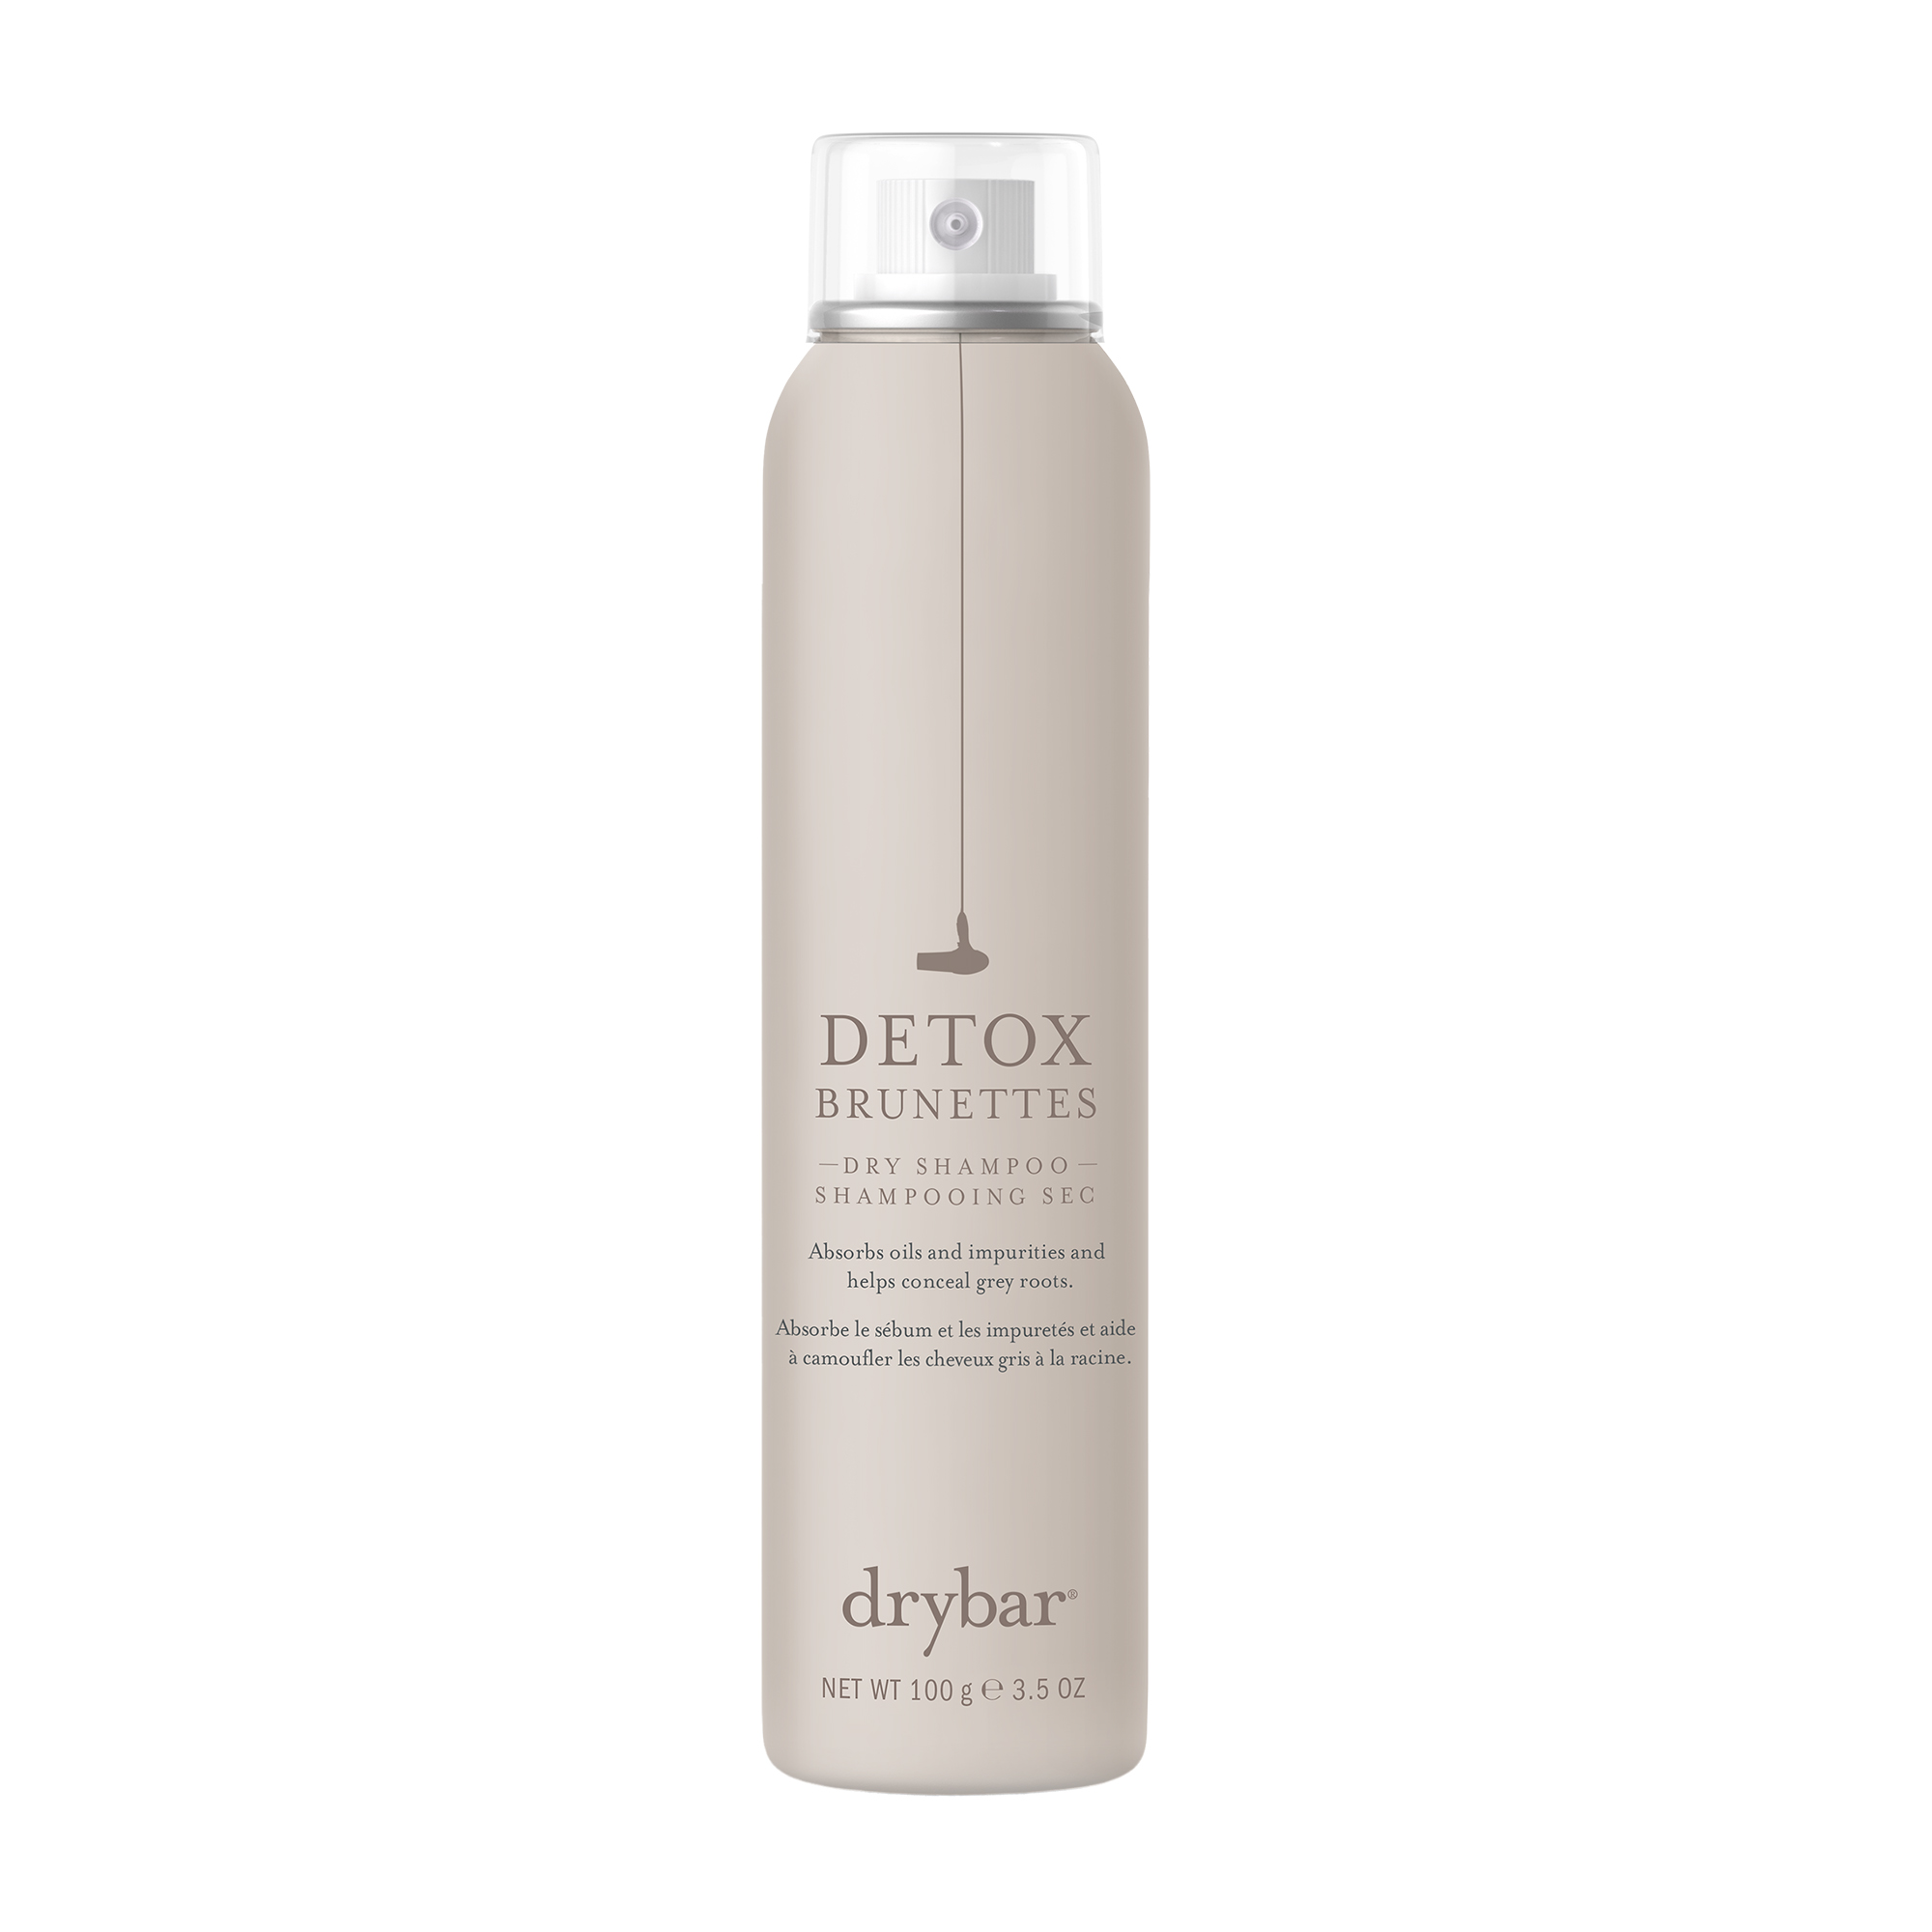 detox dry shampoo for brunettes (shampoo seco)